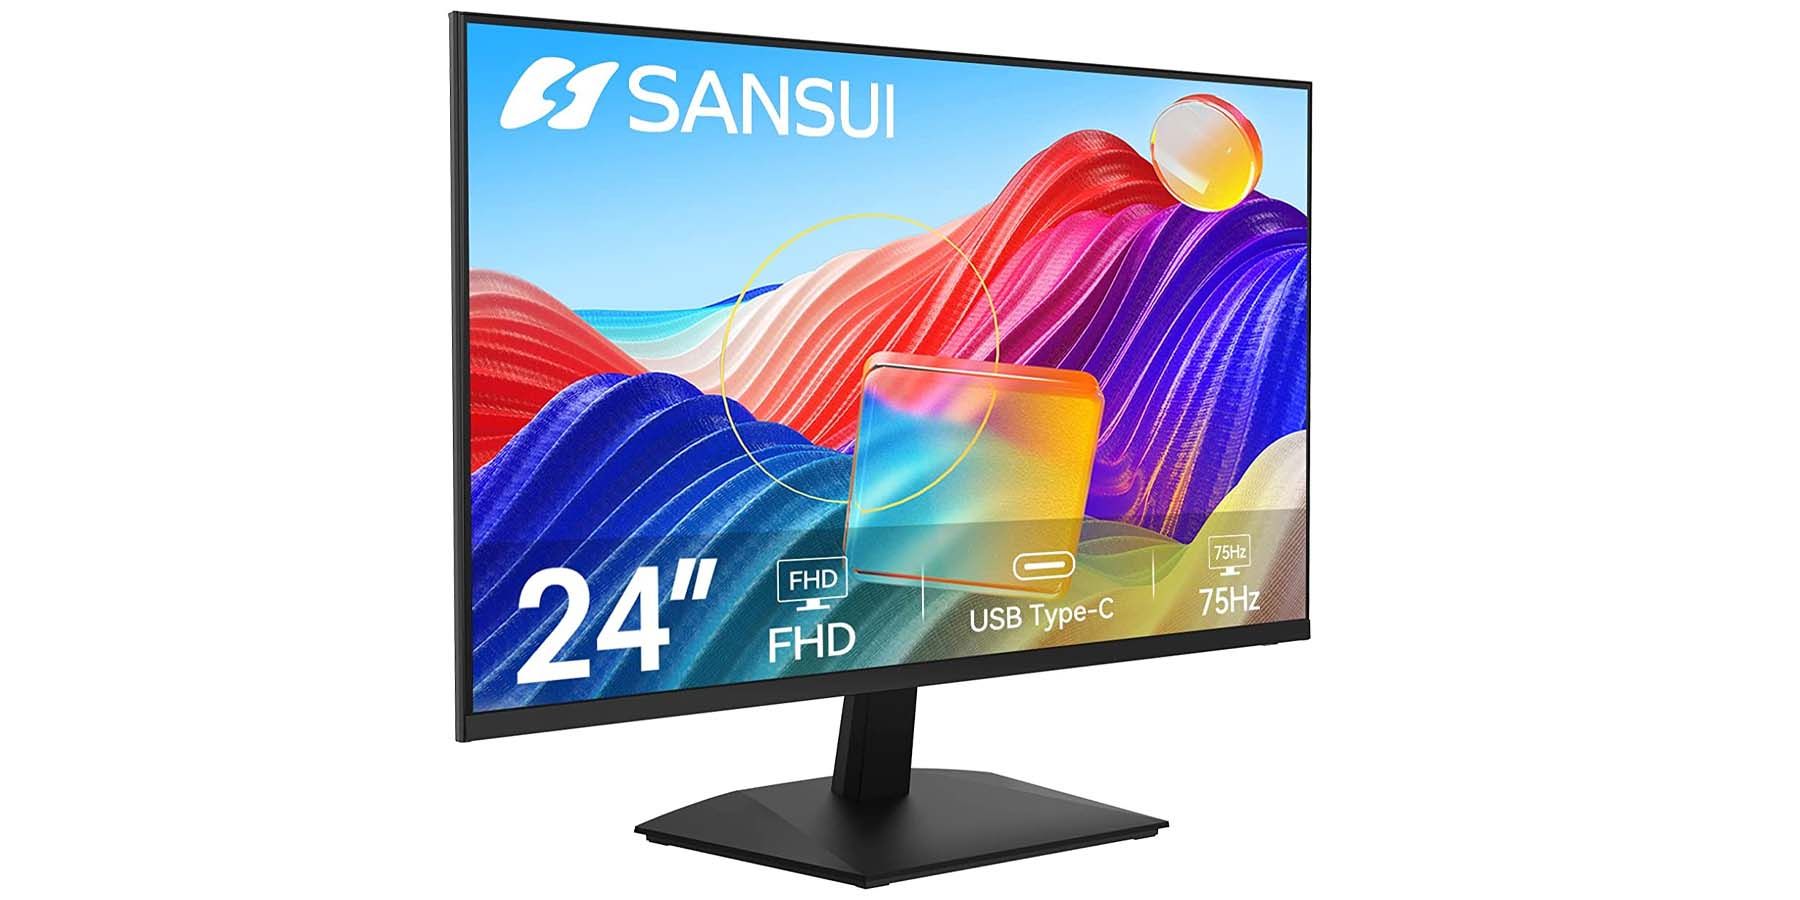 Sansui 24 inch monitor